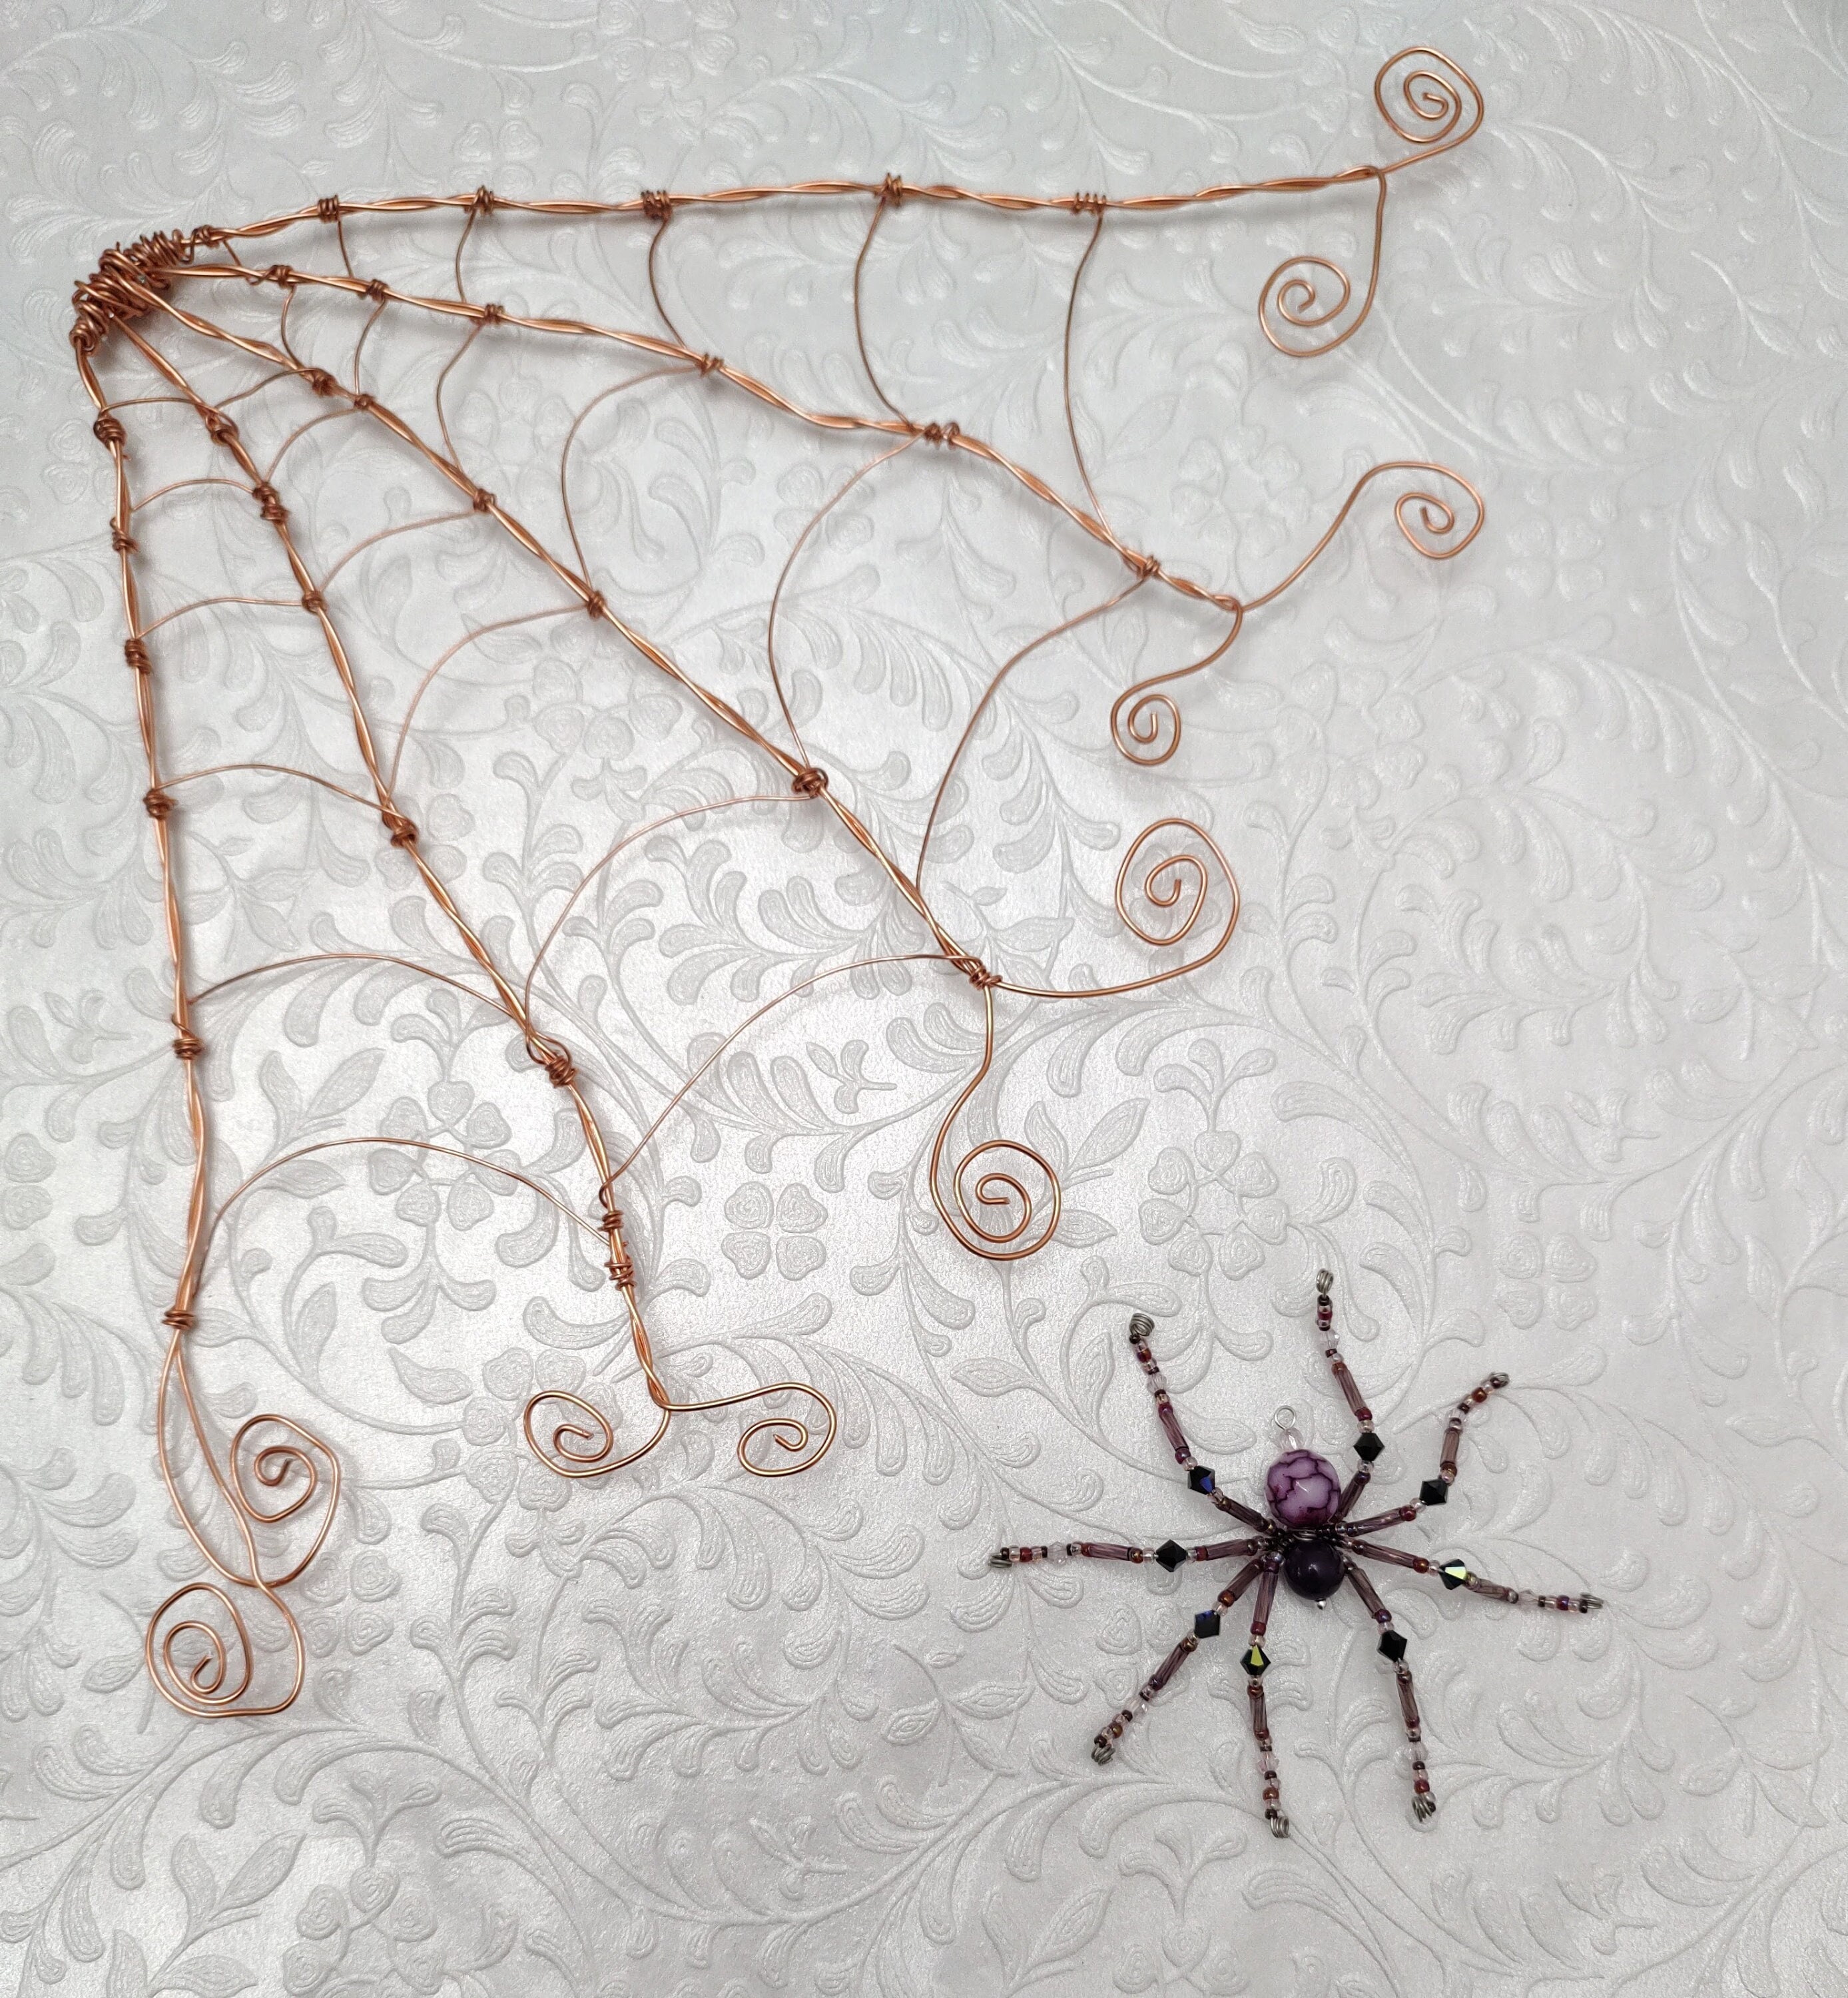 Copper Wire Spider Web Decoration for Halloween -  Canada